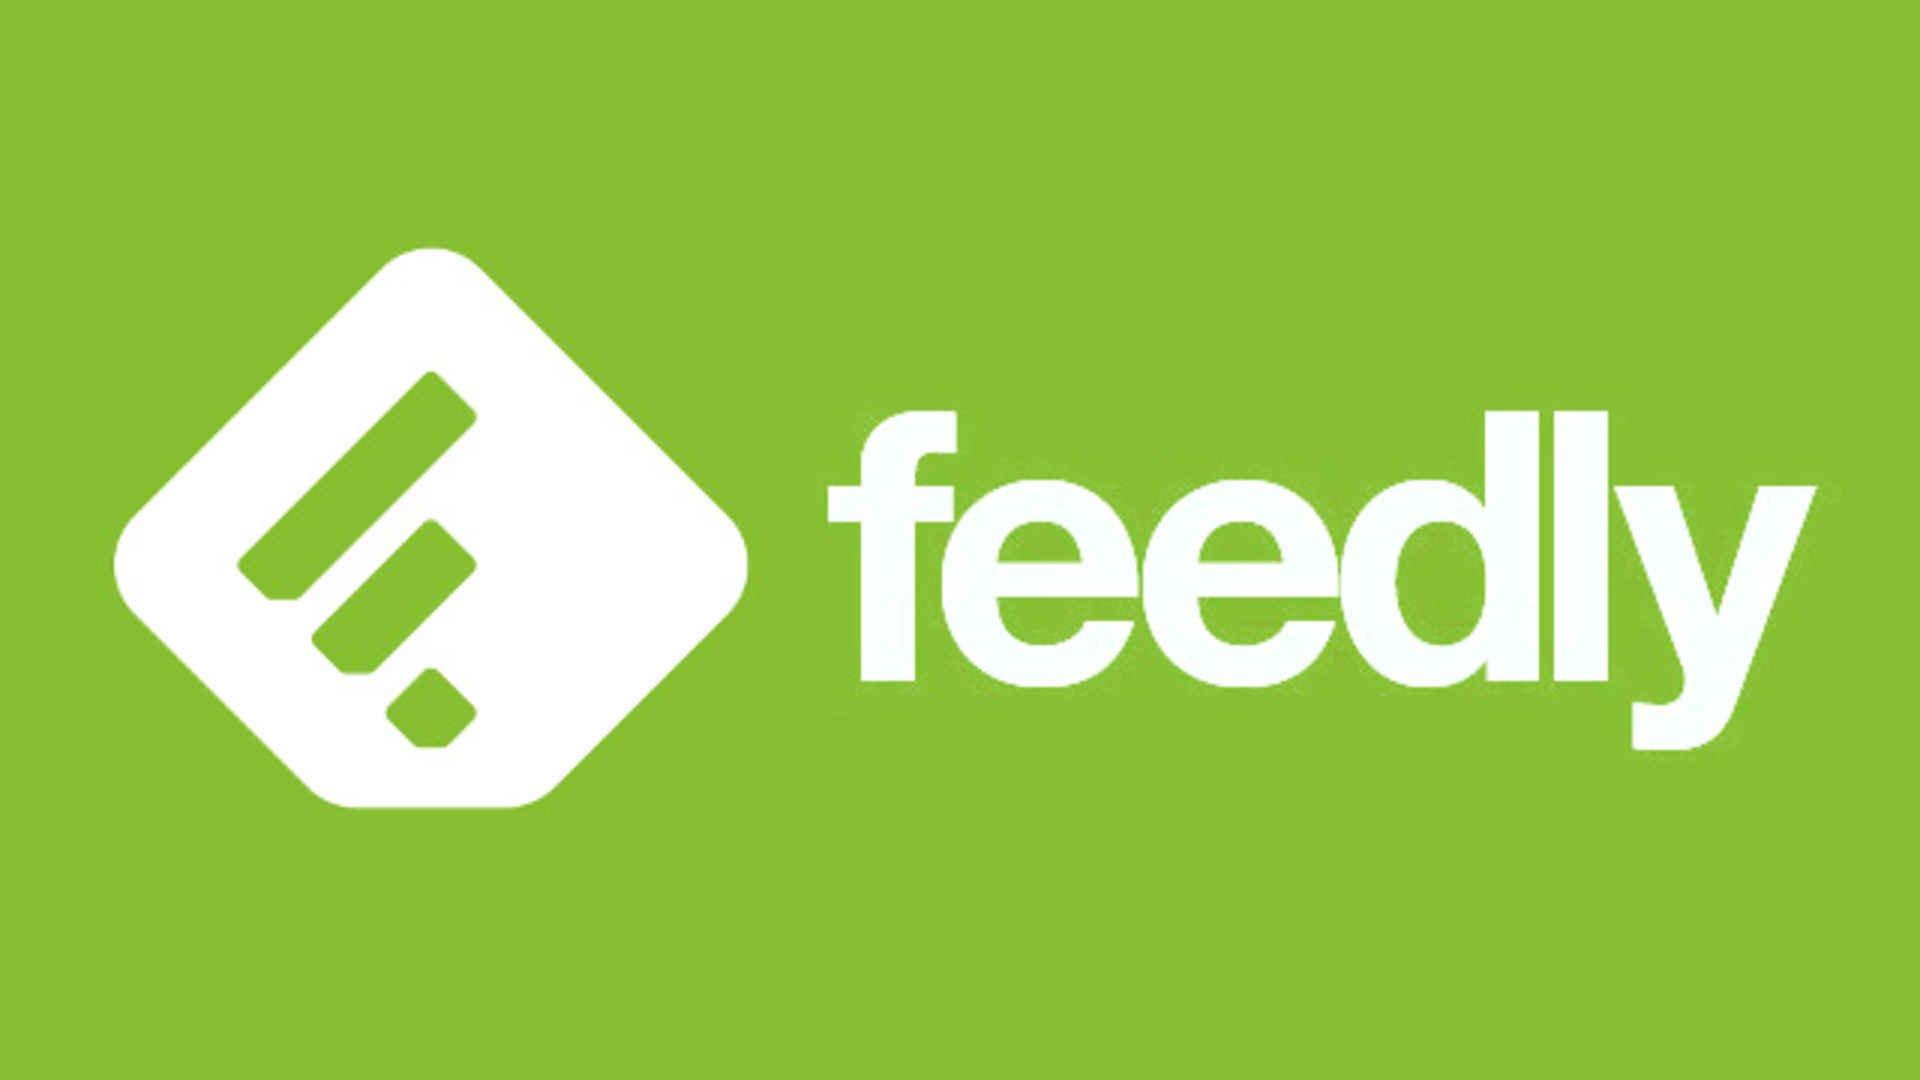 Feedly-Logo